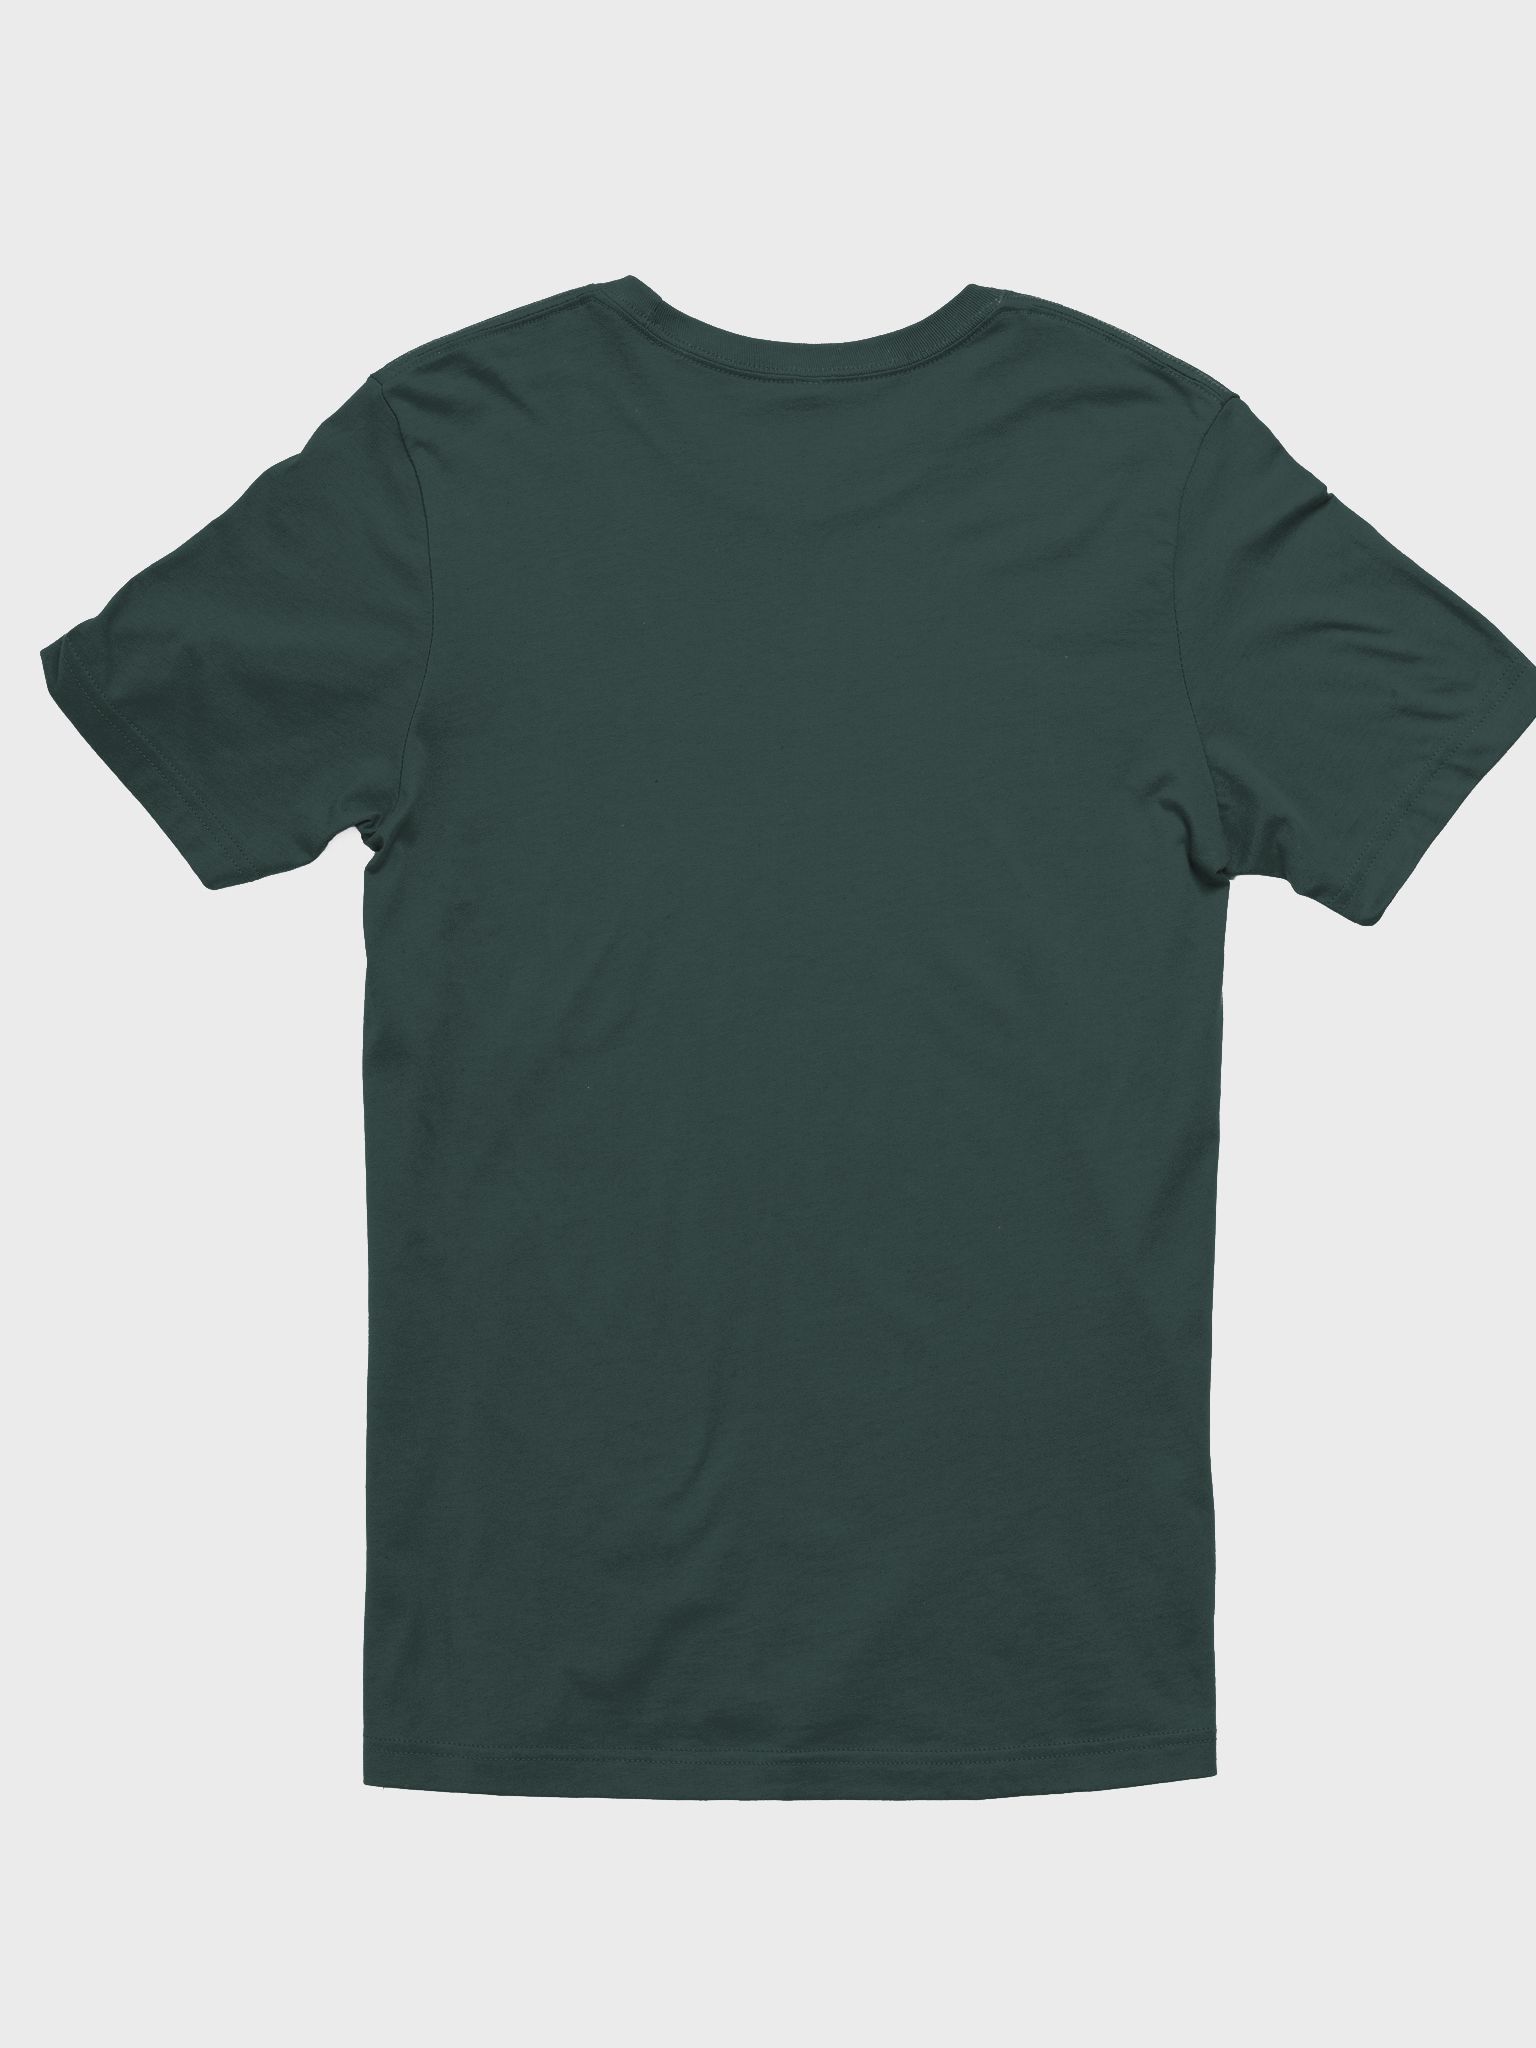 Gentlebird T-Shirt Design Vector – ThreadBasket